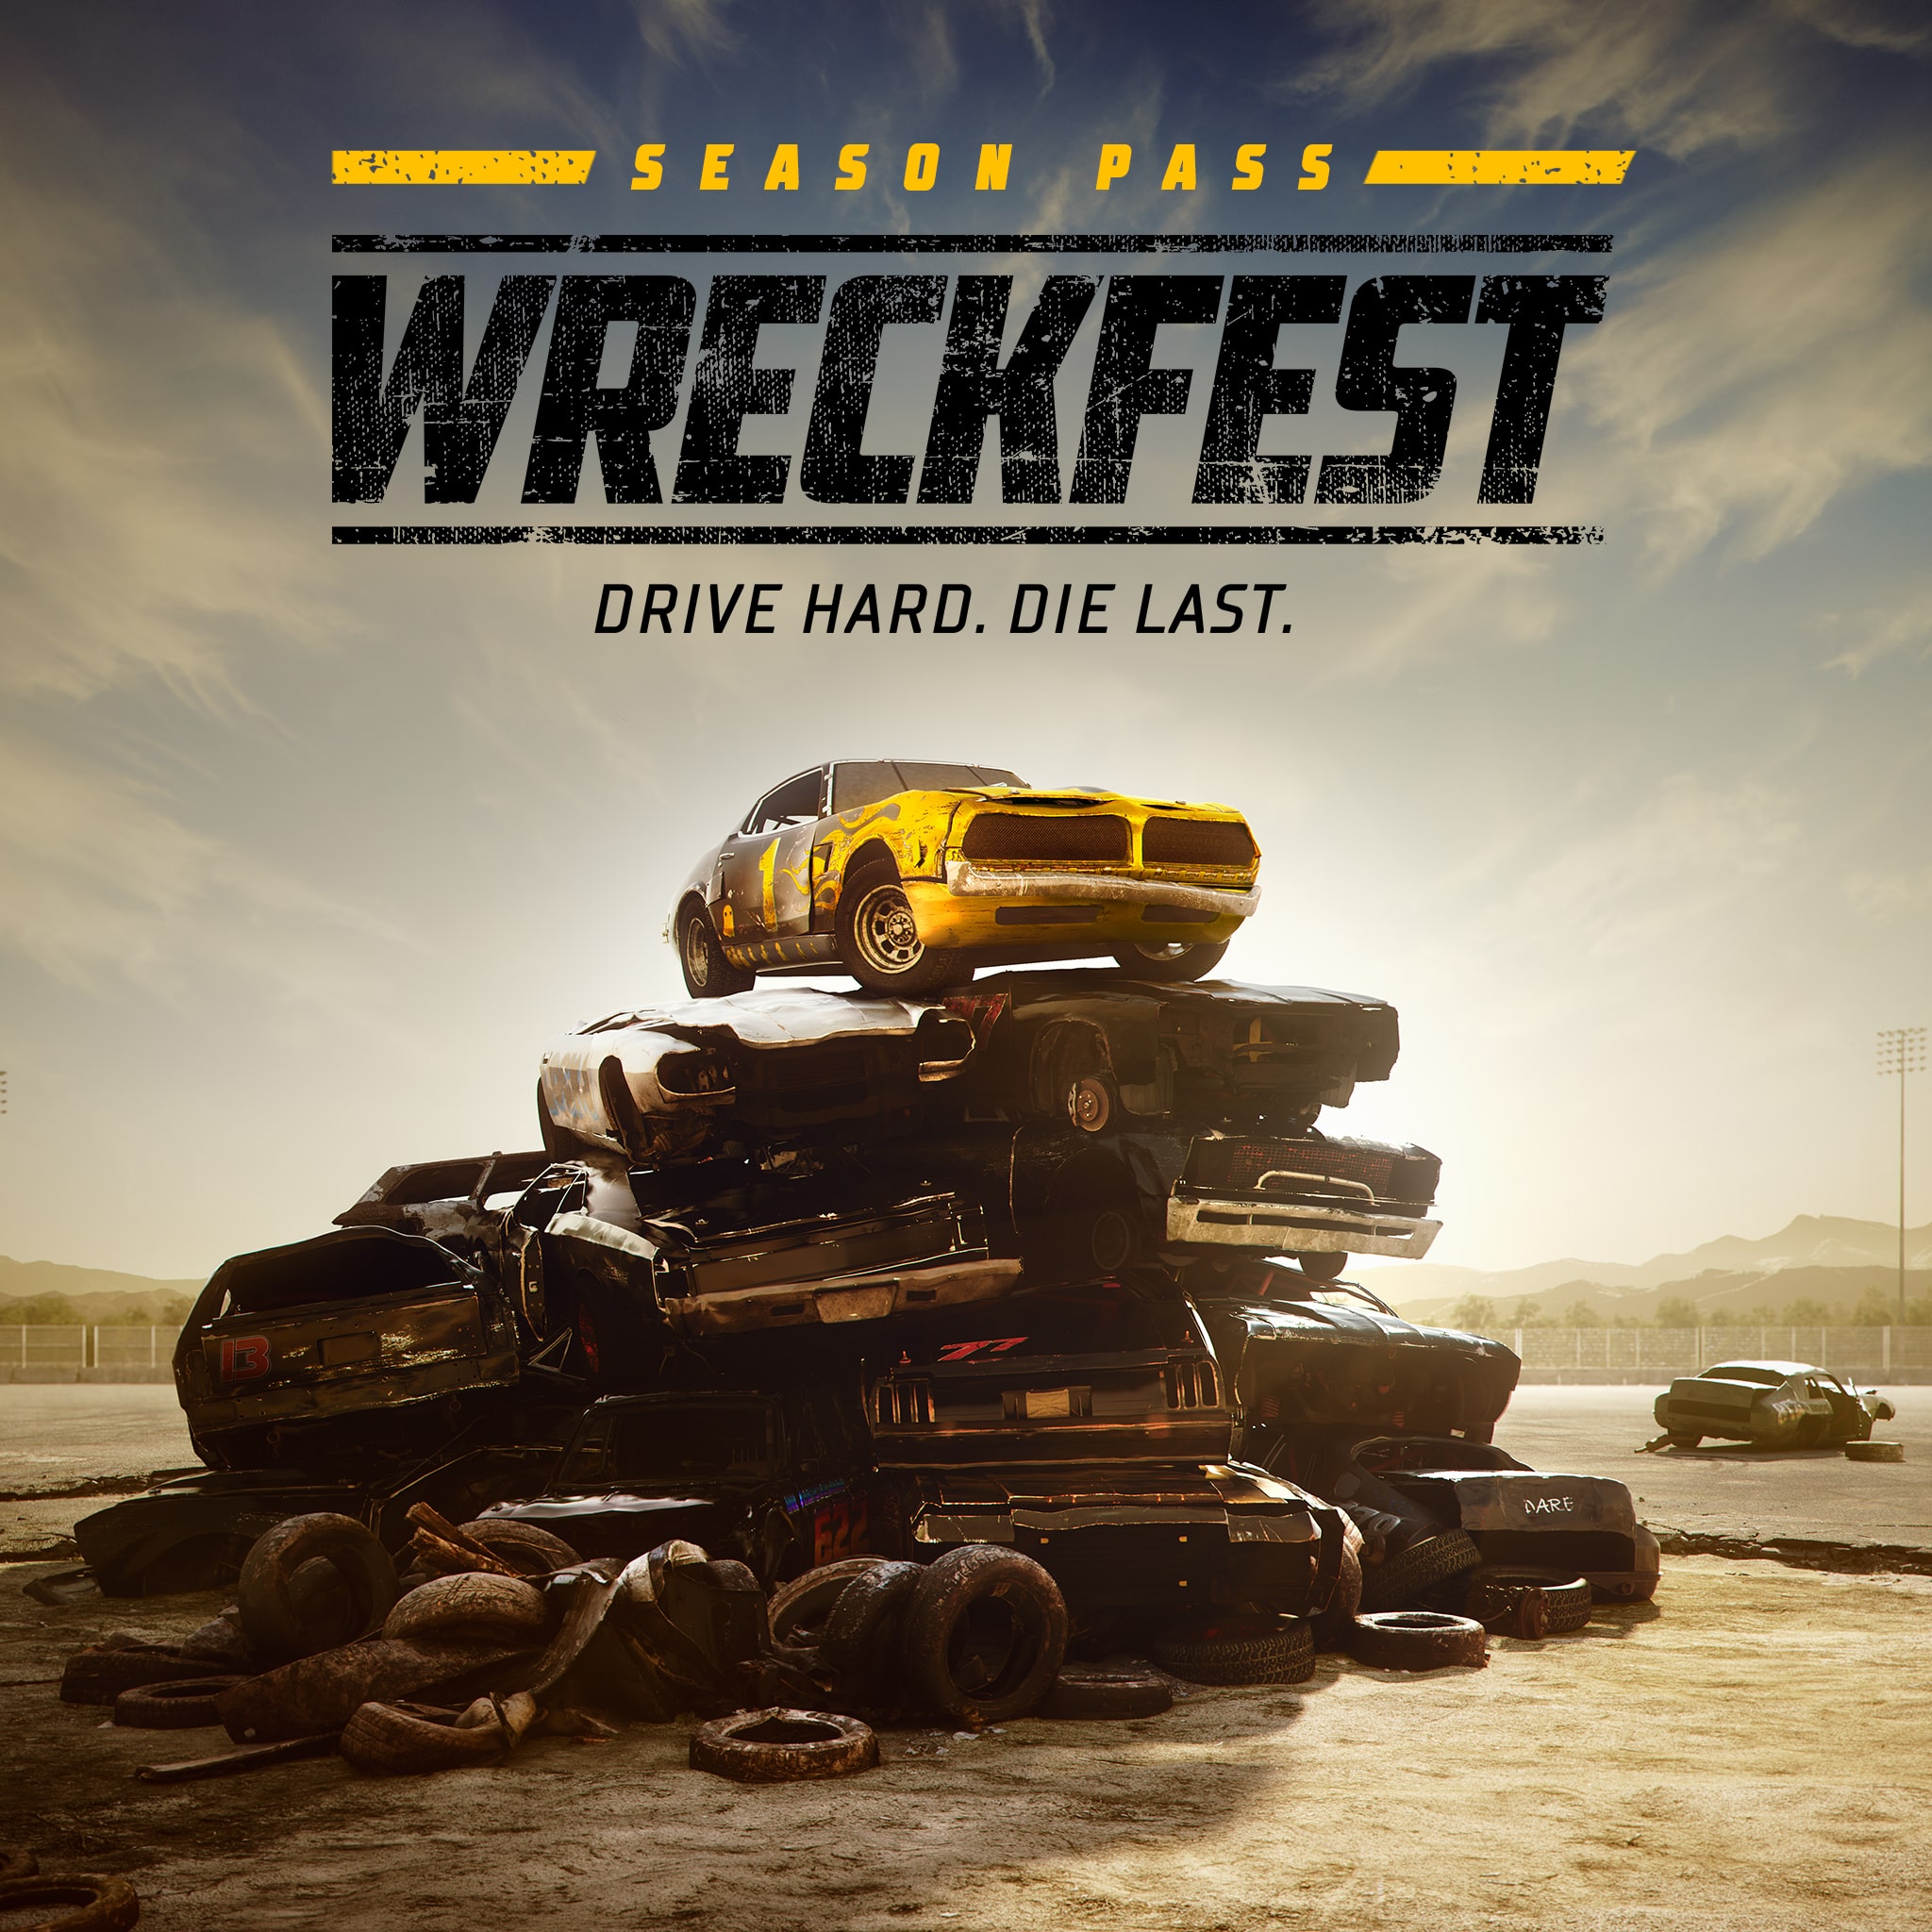 Wreckfest: Drive Hard. Die Last. Season Pass